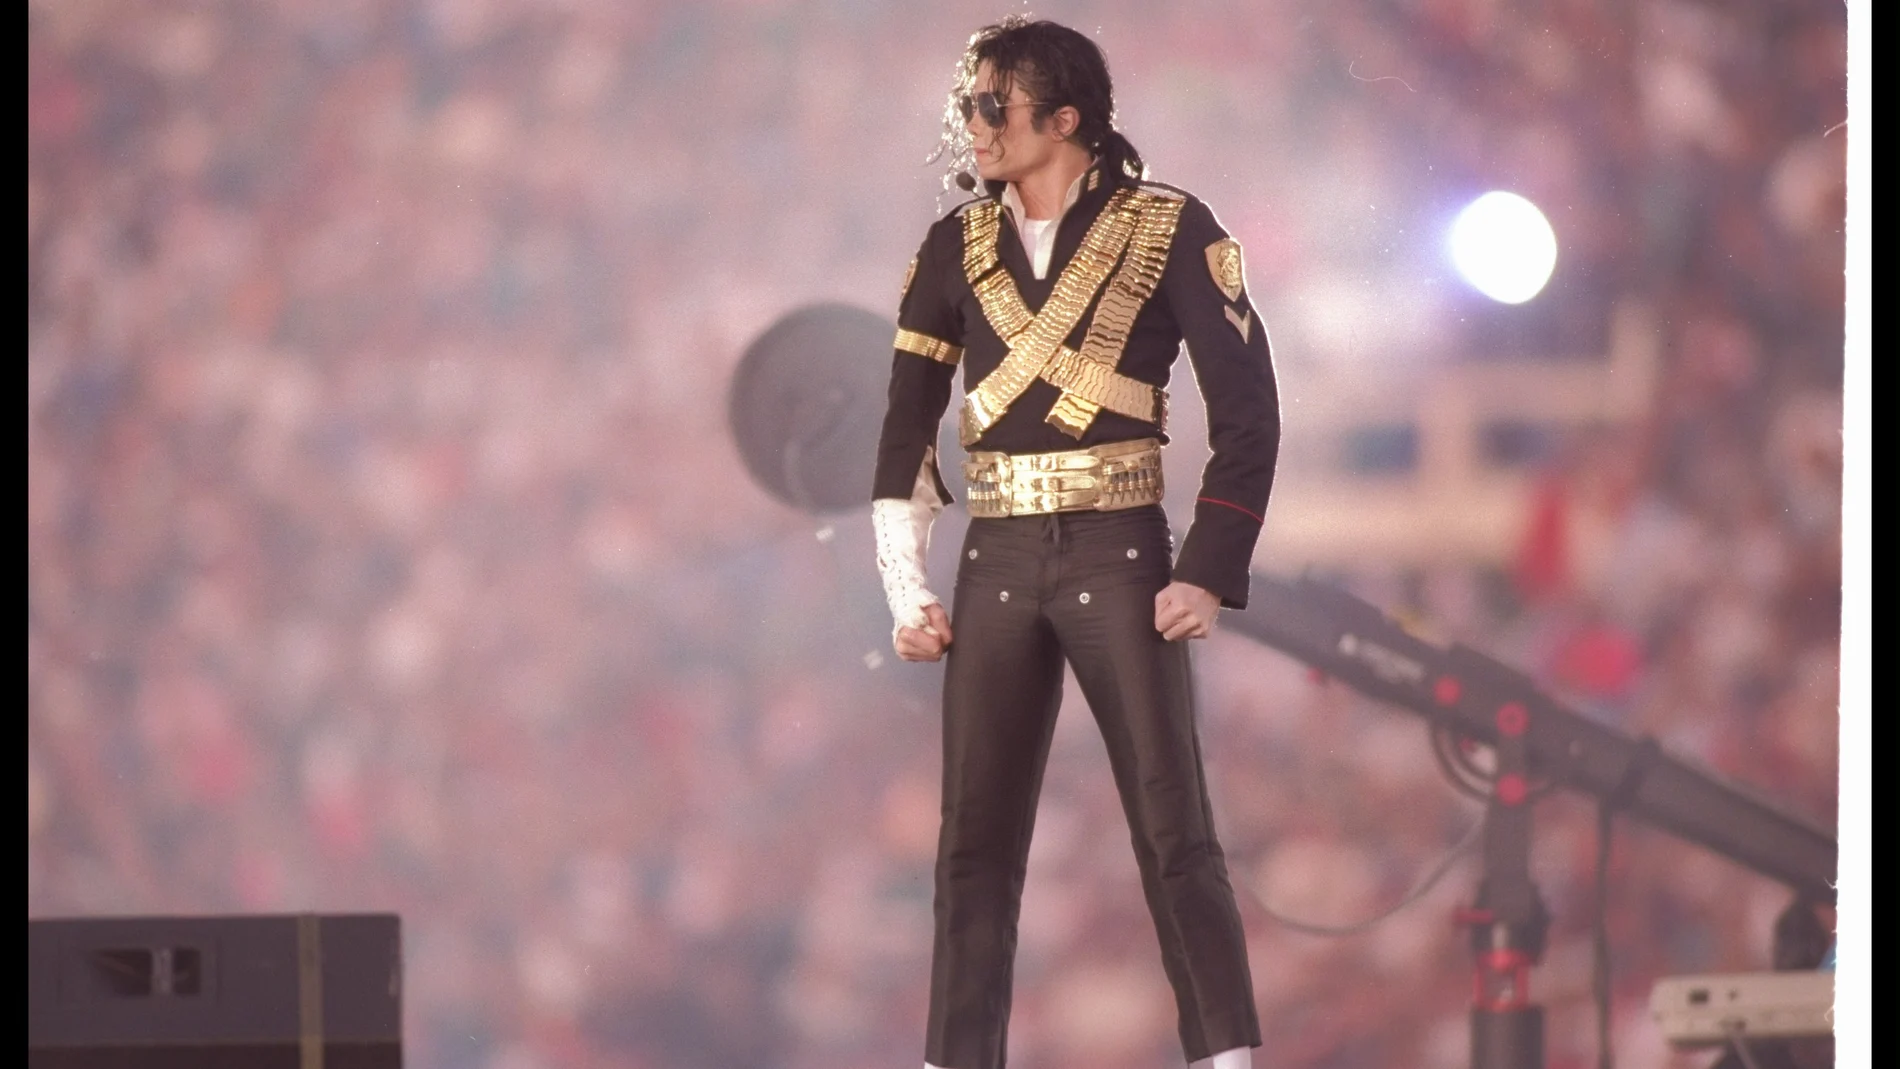 Efemérides de hoy 25 de junio de 2021: Muere Michael Jackson